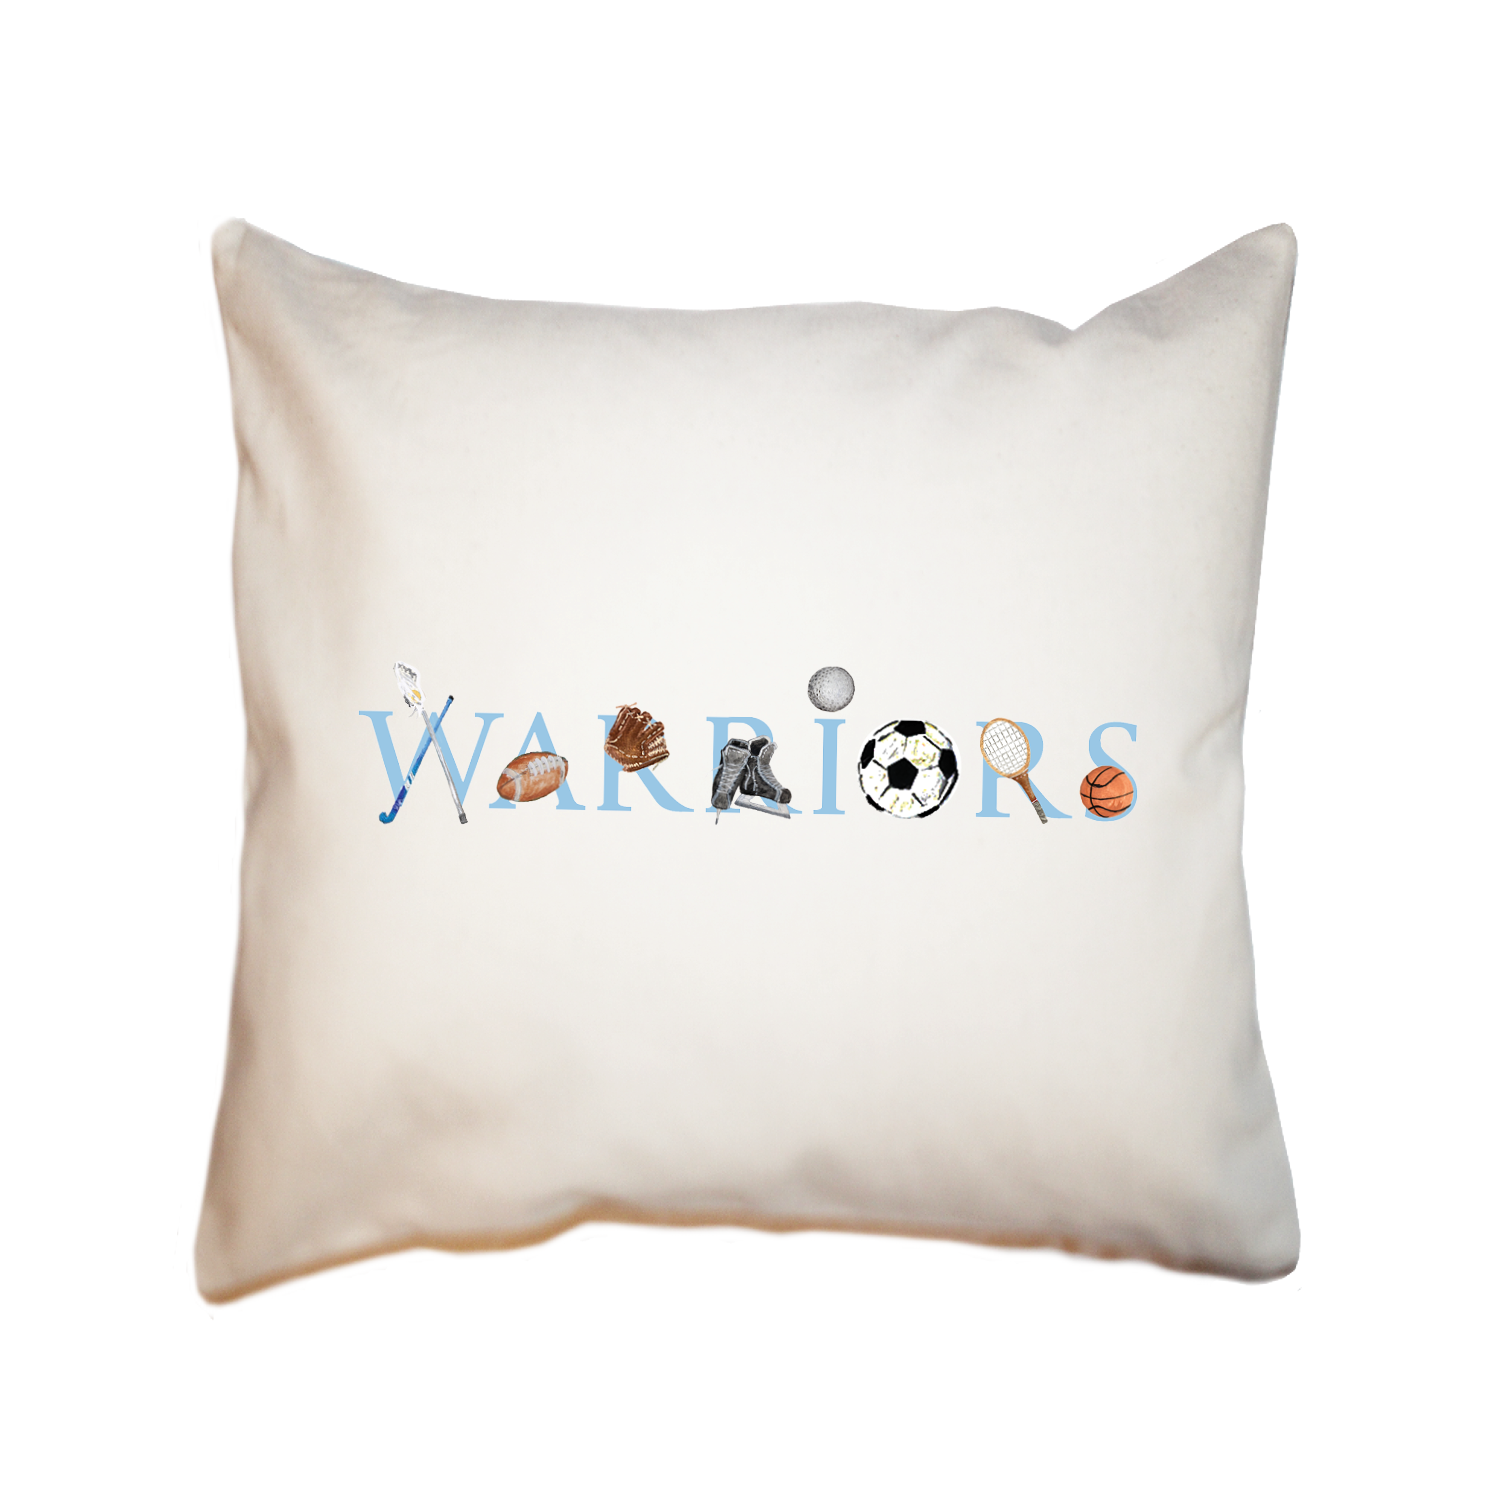 warriors square pillow